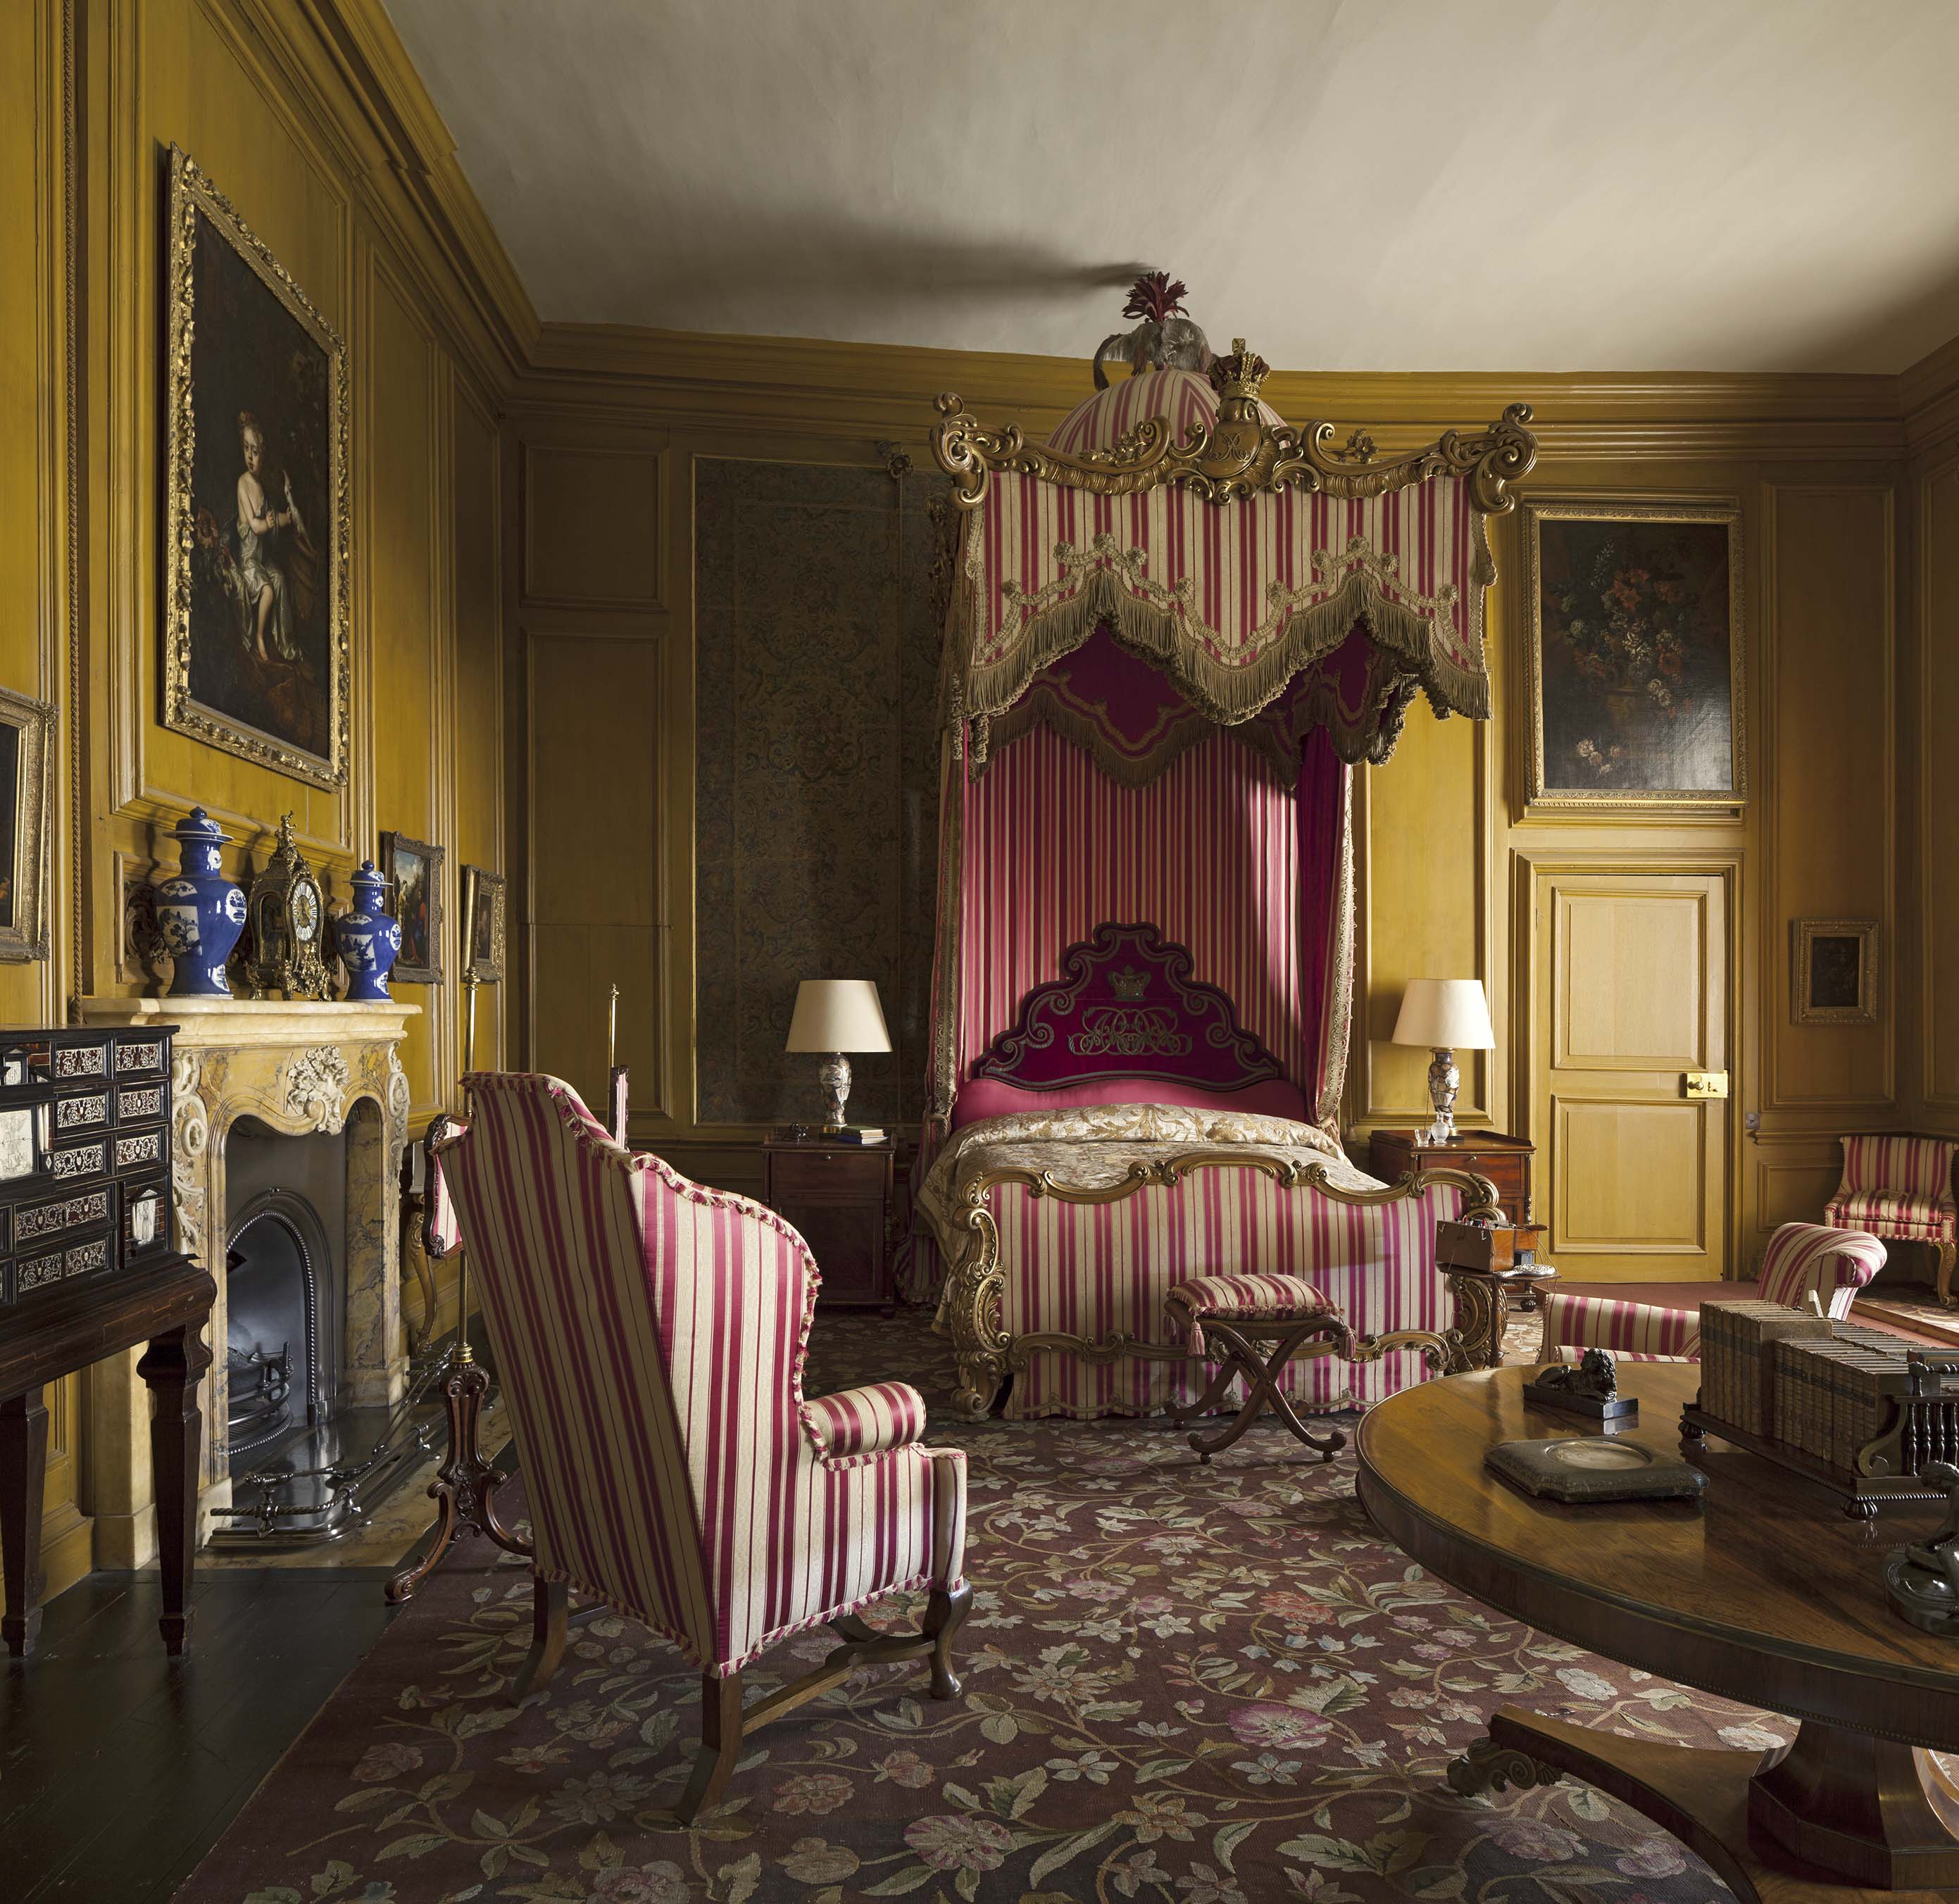 The Queen's Bedroom at Belton House.